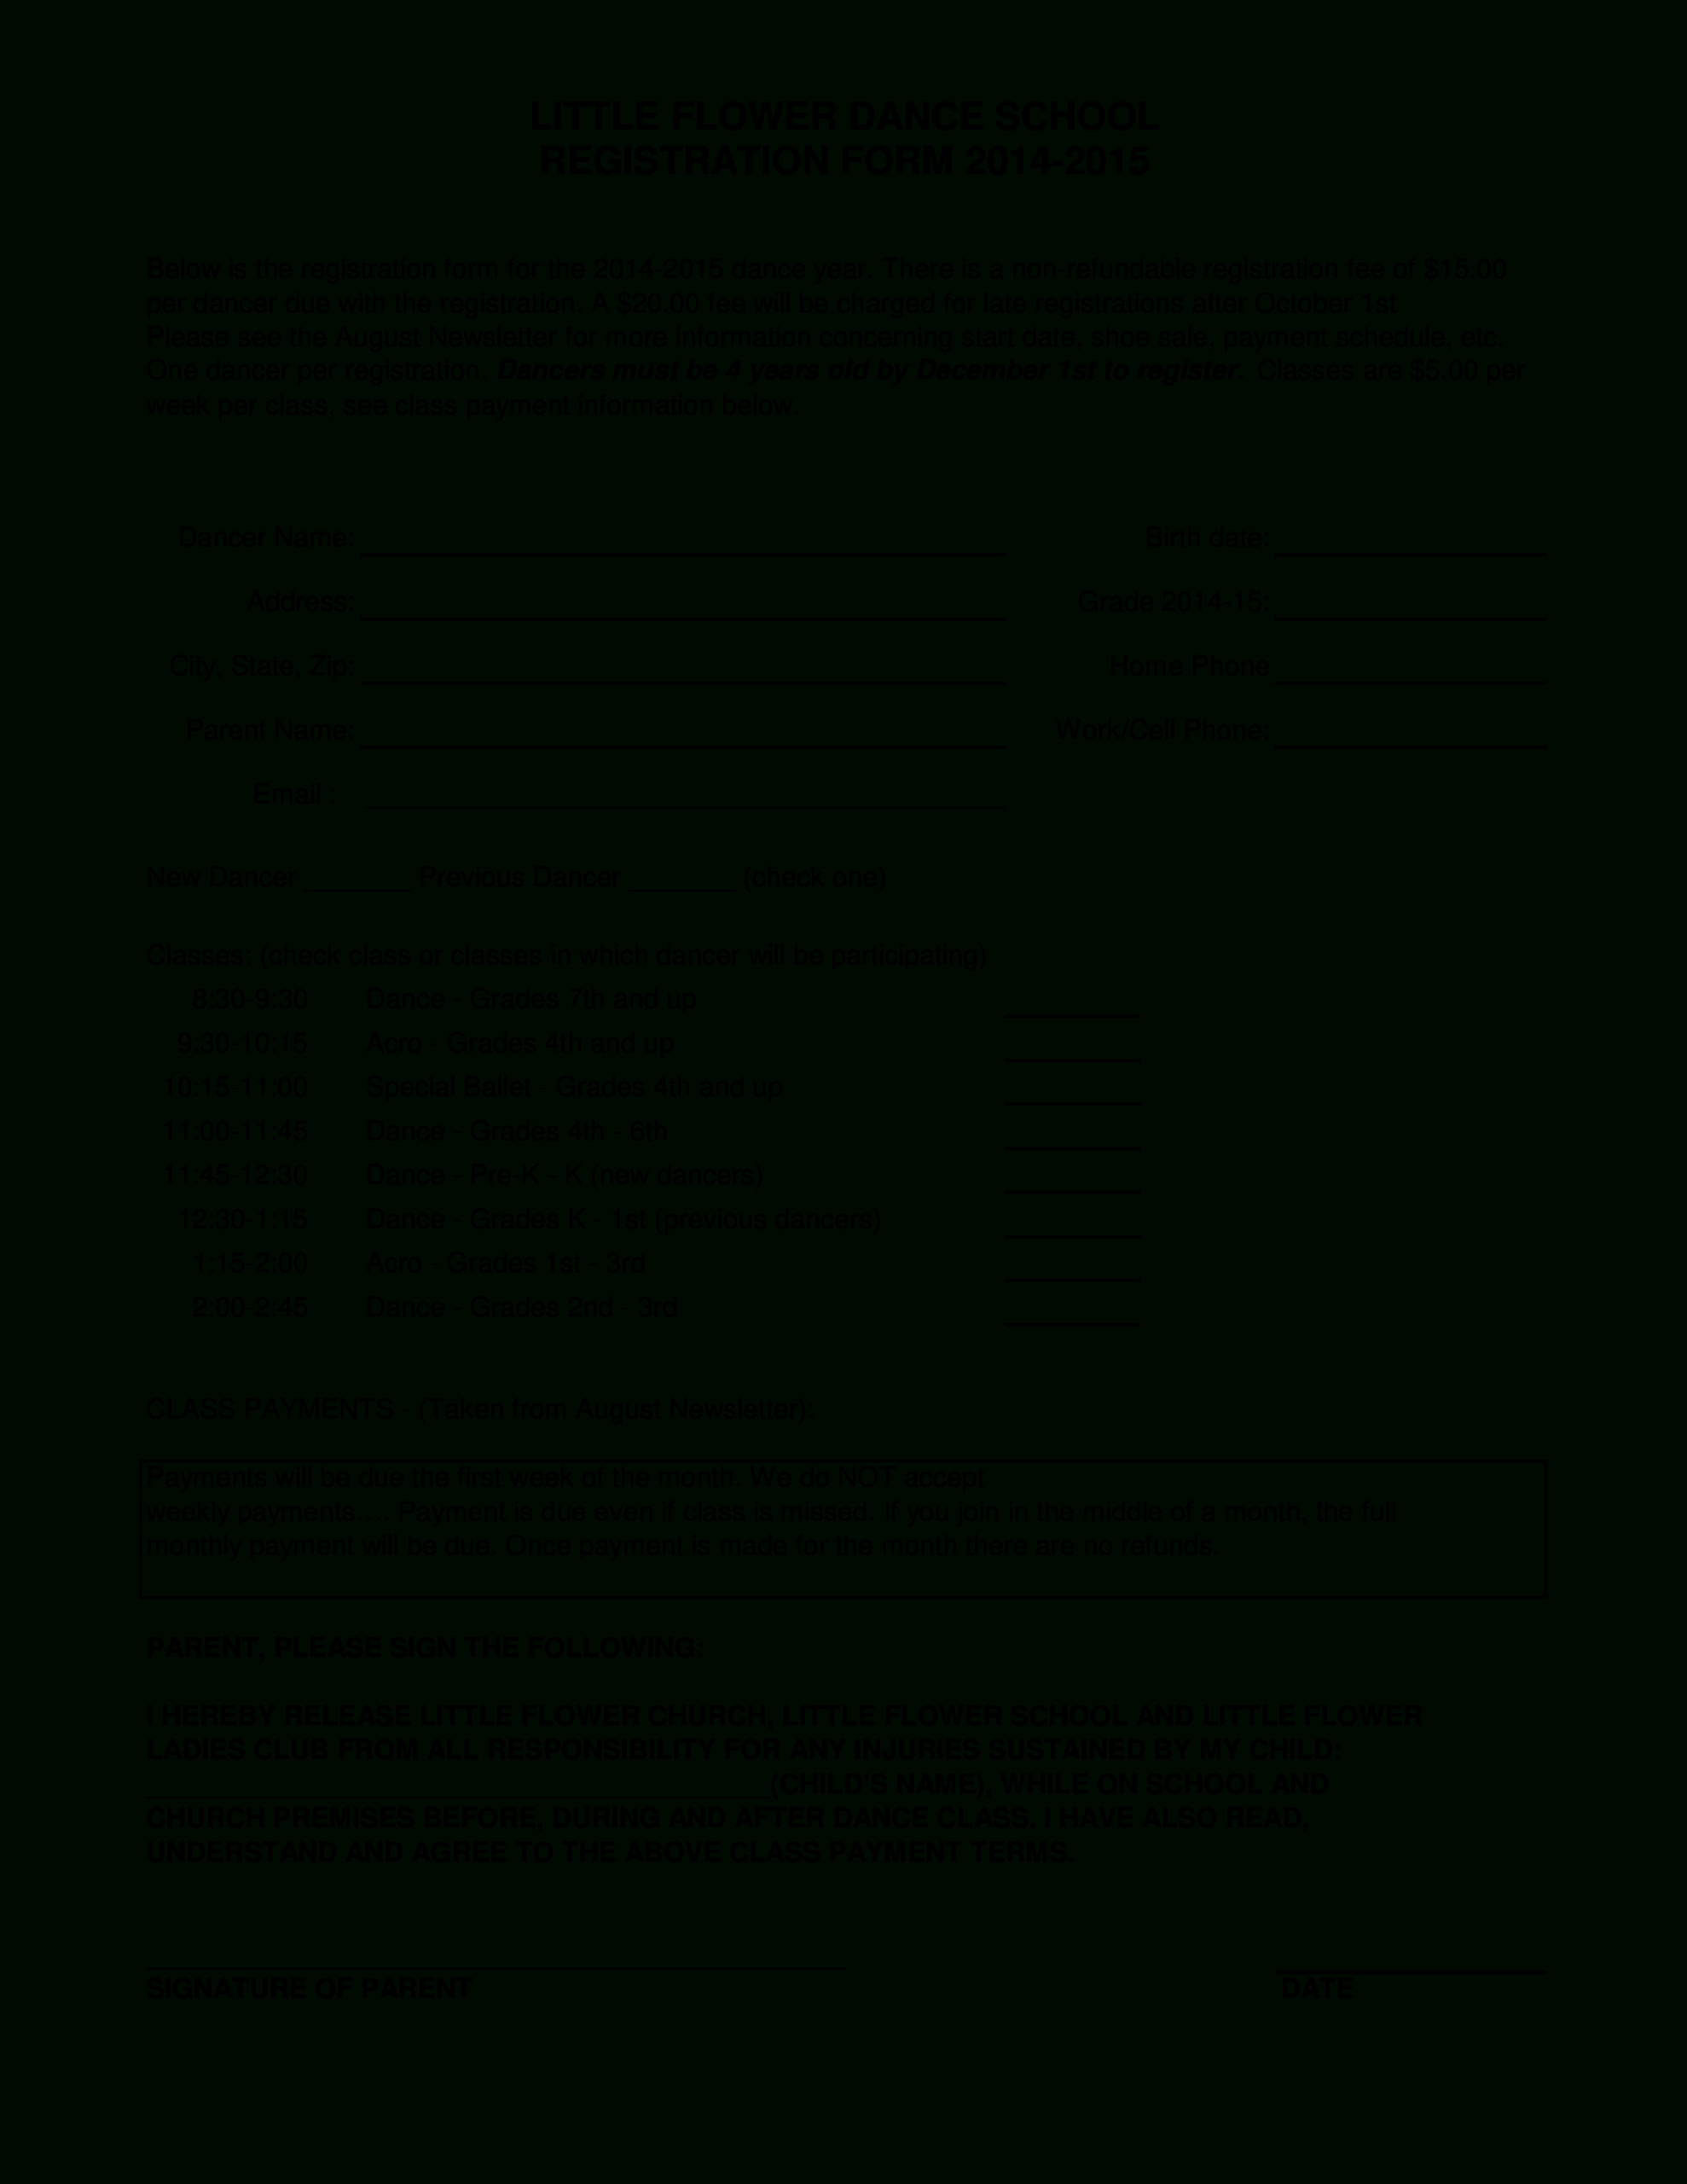 Dance School Registration Form | Templates At Intended For School Registration Form Template Word